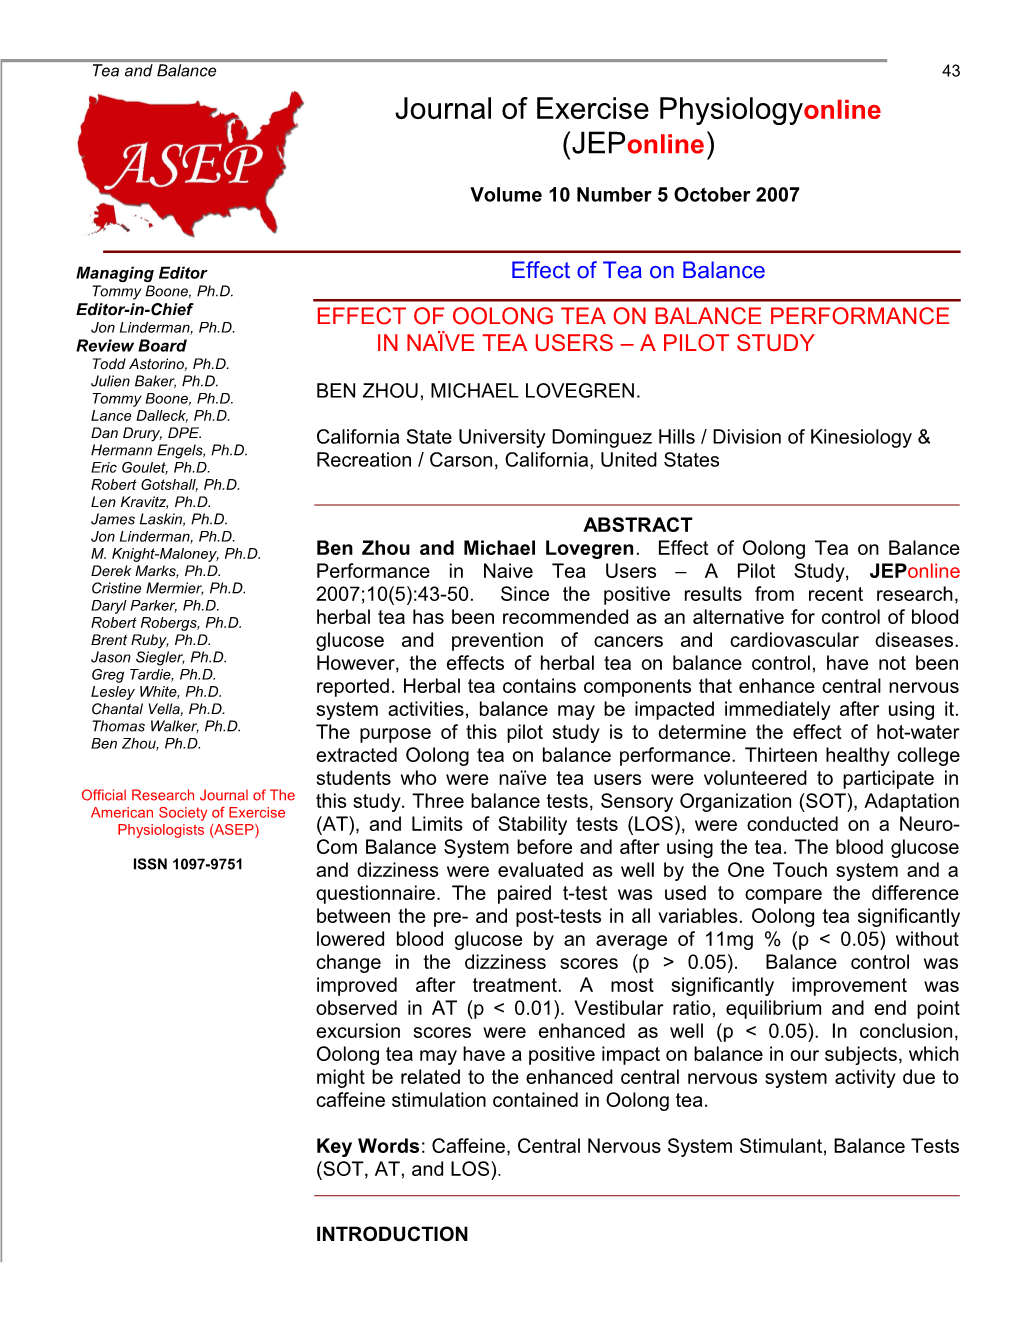 Effect of Oolong Tea on Balance Performance in Naïve Tea Users a Pilot Study